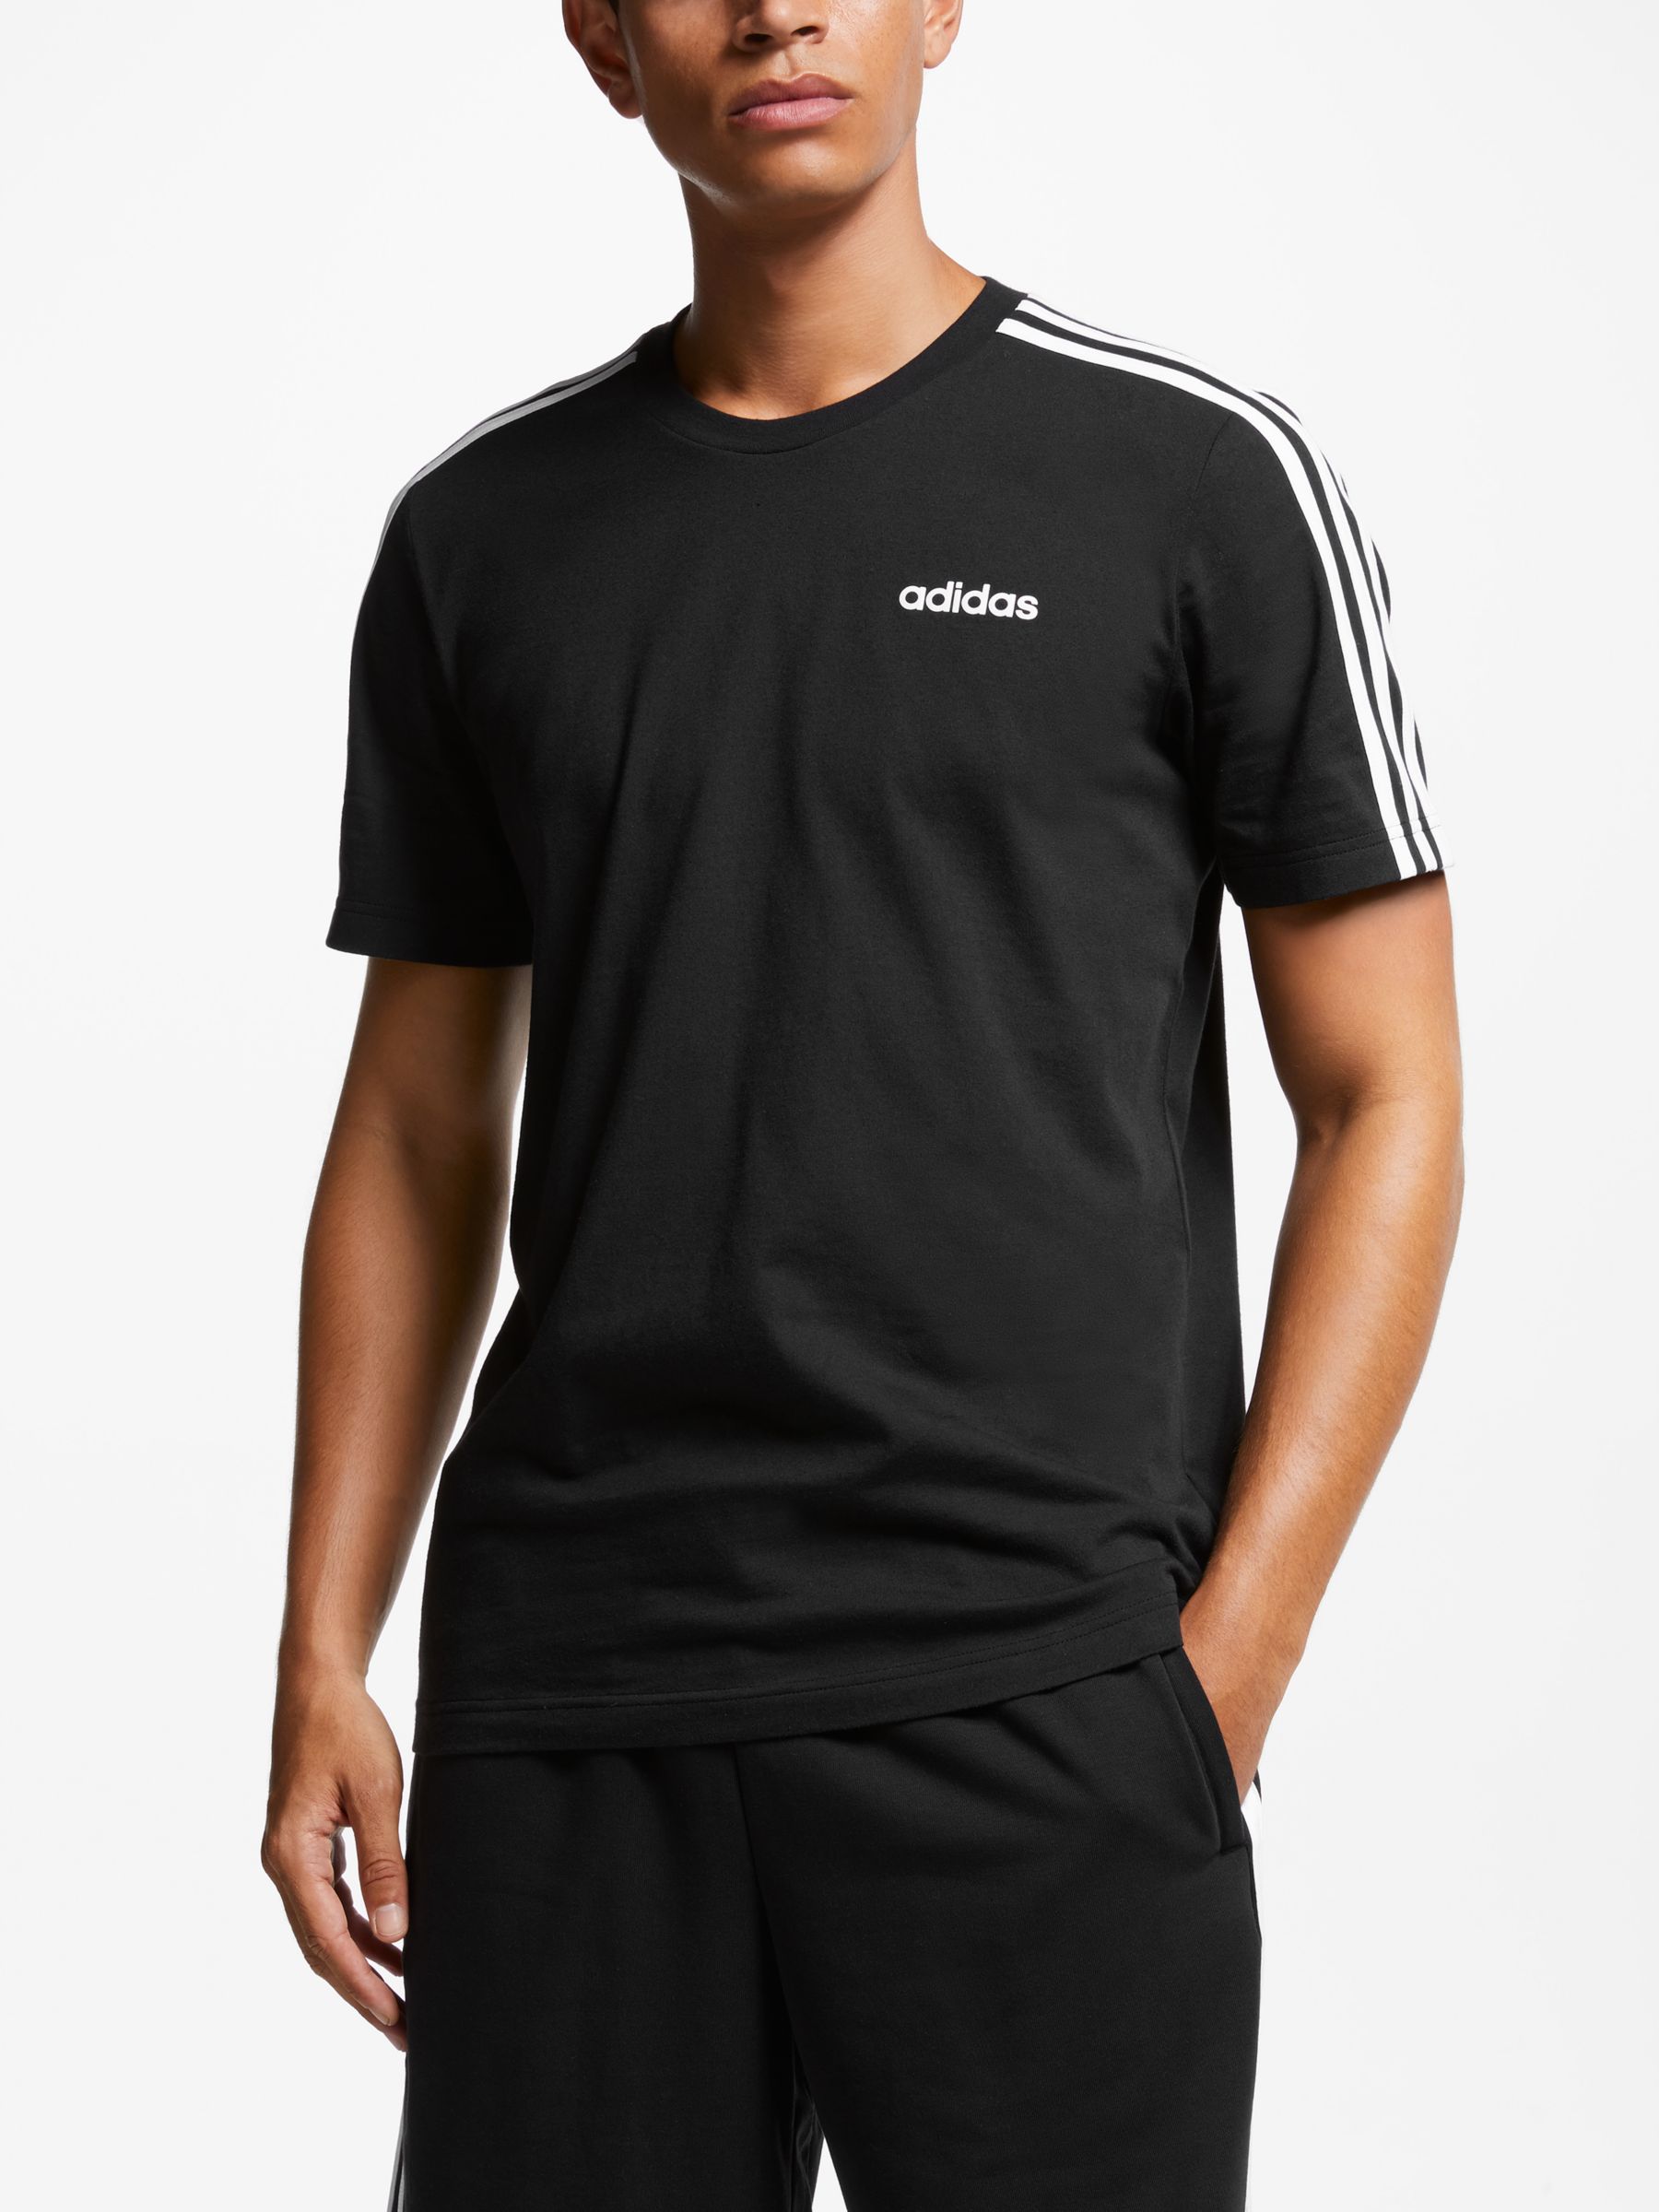 Adidas T Shirt Black And White - Ghana tips